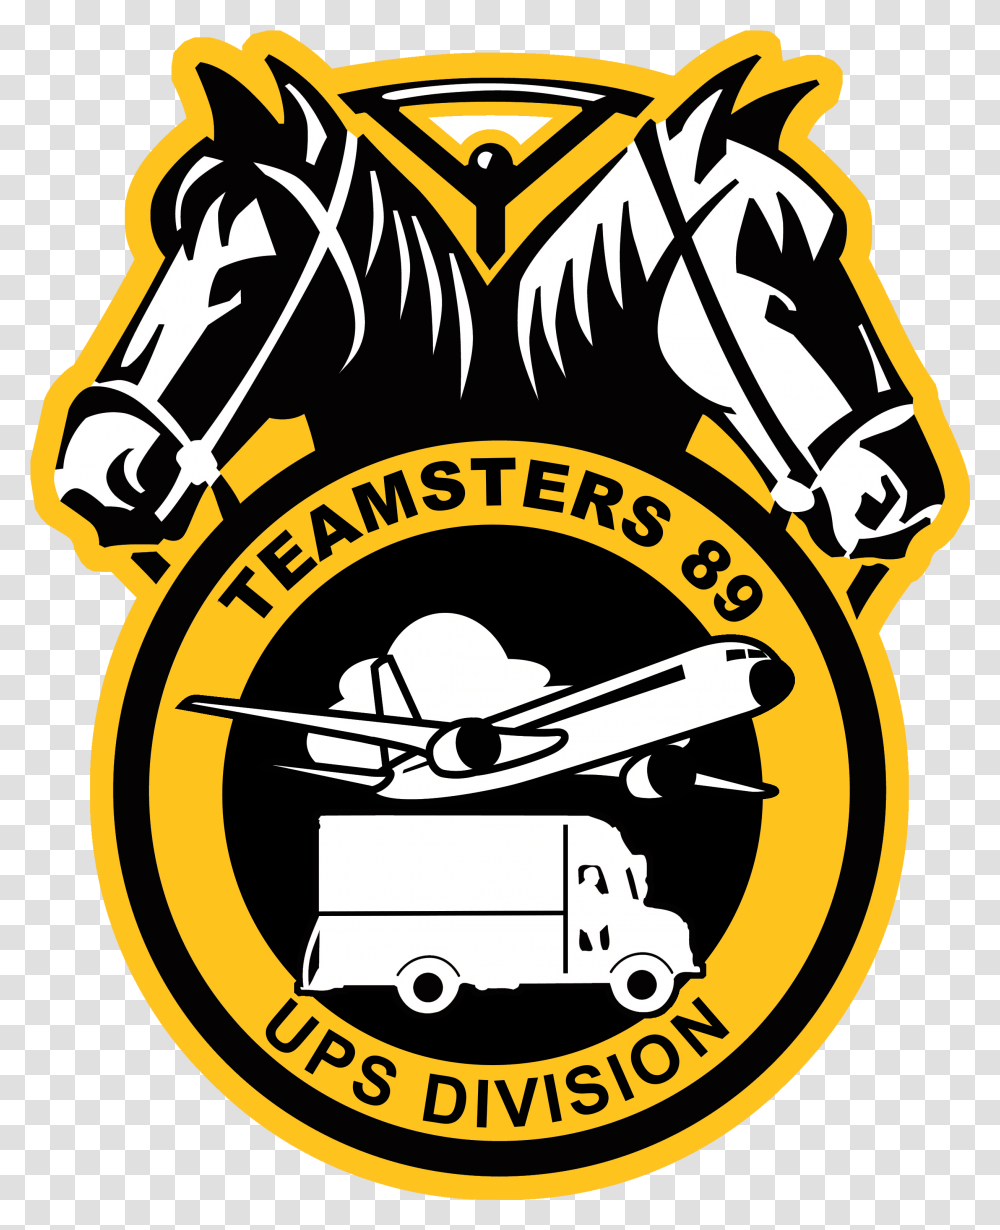 Teamsters Local 89 Ups Division International Brotherhood Of Teamsters, Symbol, Logo, Trademark, Emblem Transparent Png